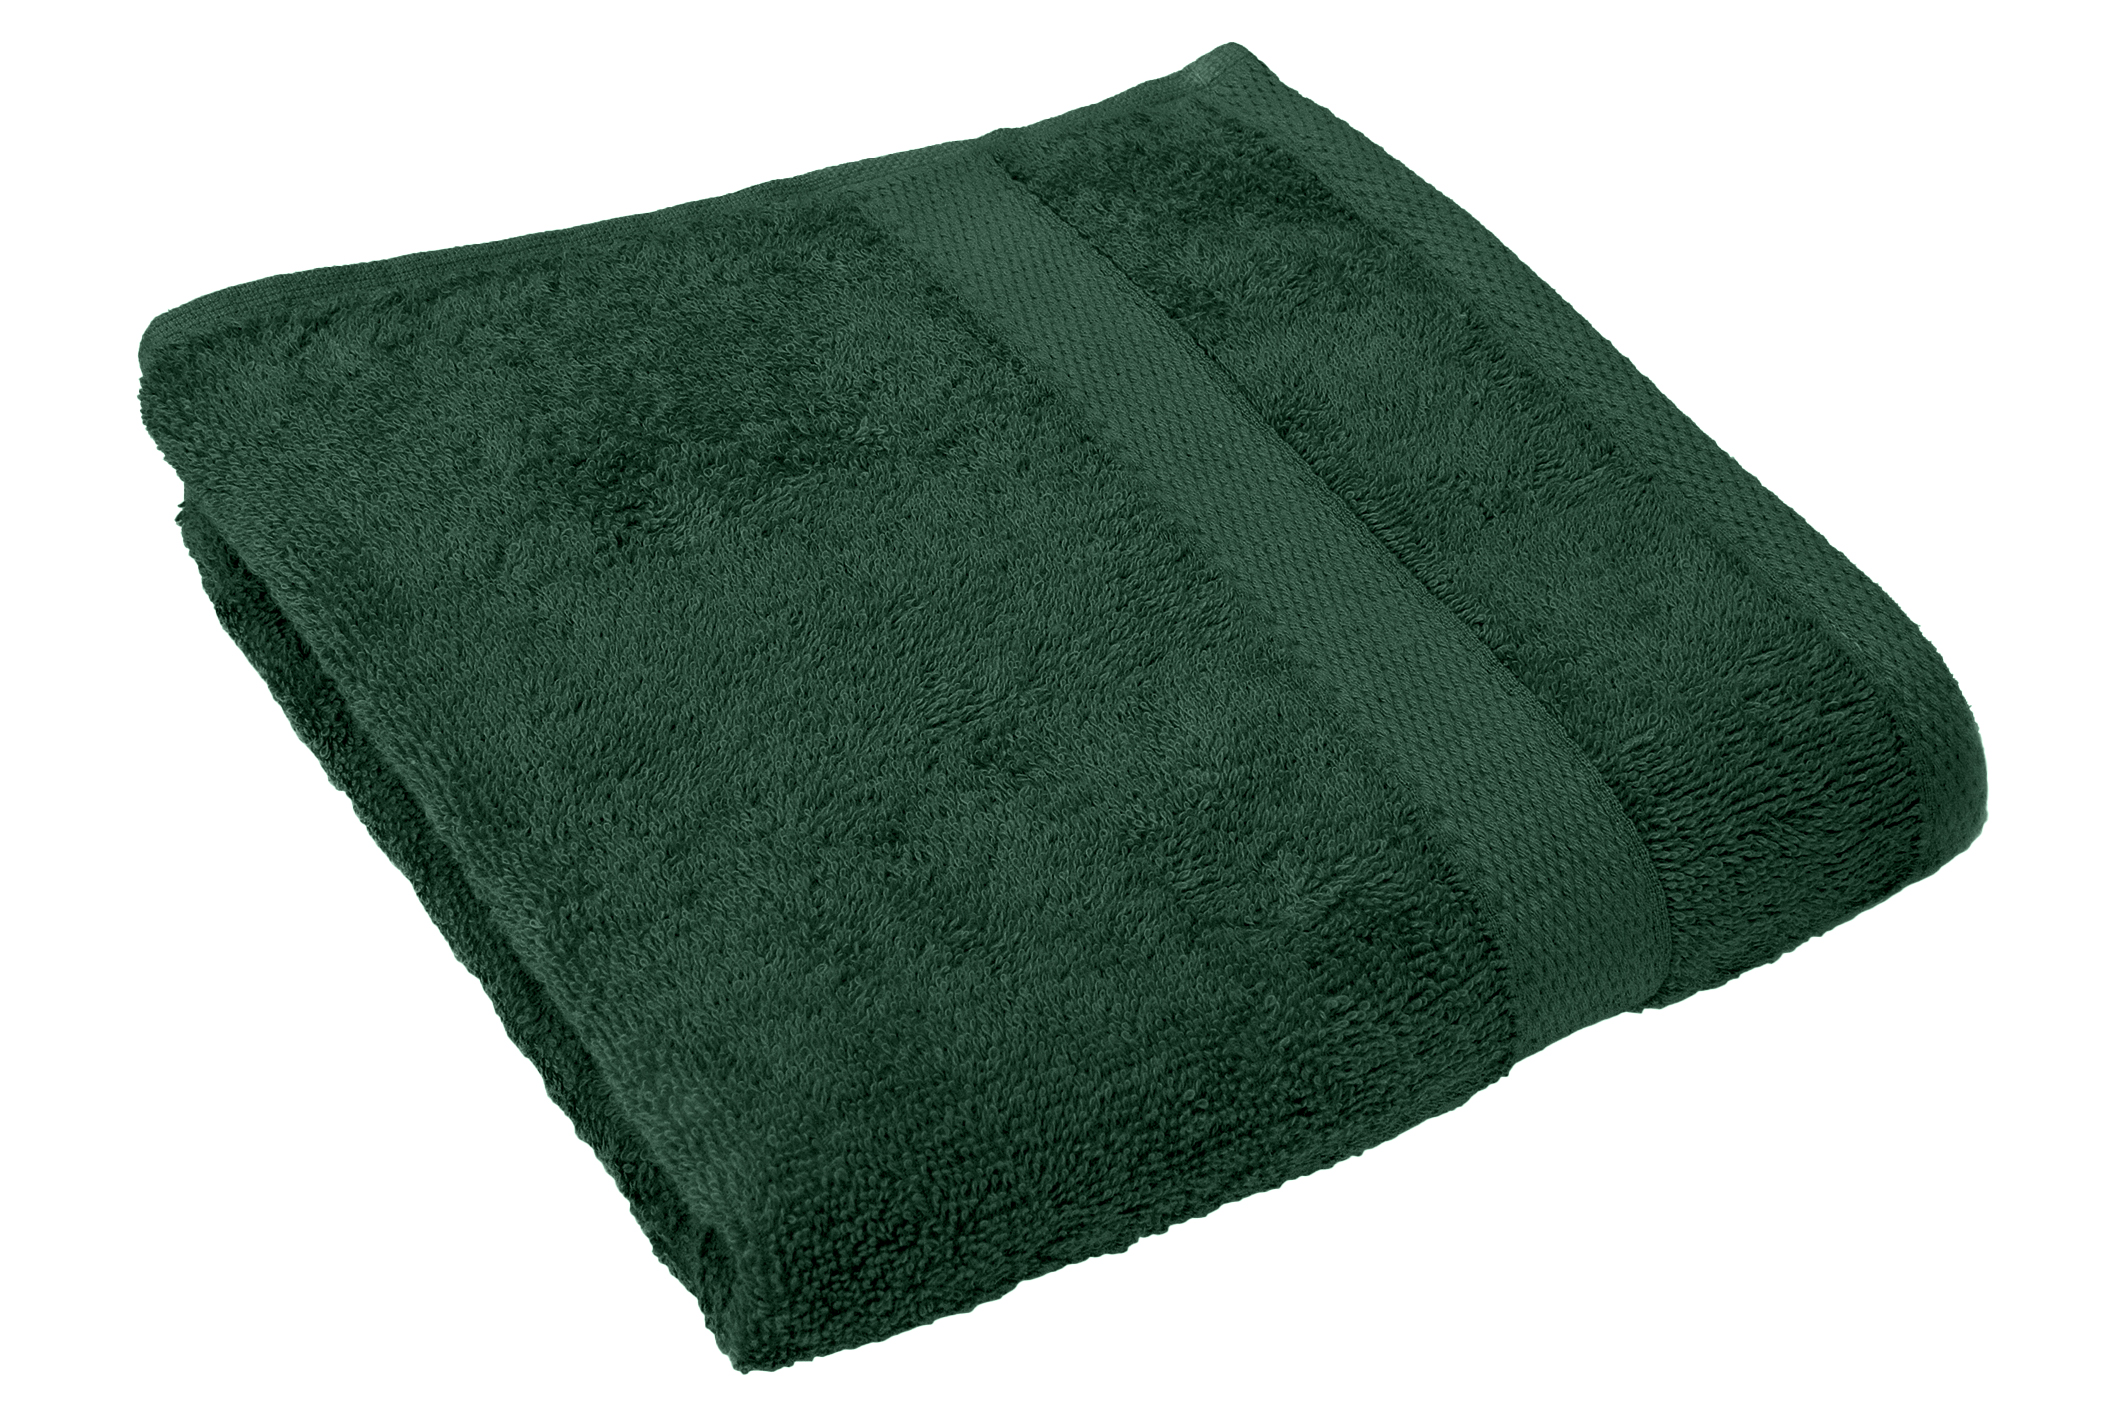 Shower towel 100x150cm, dark green